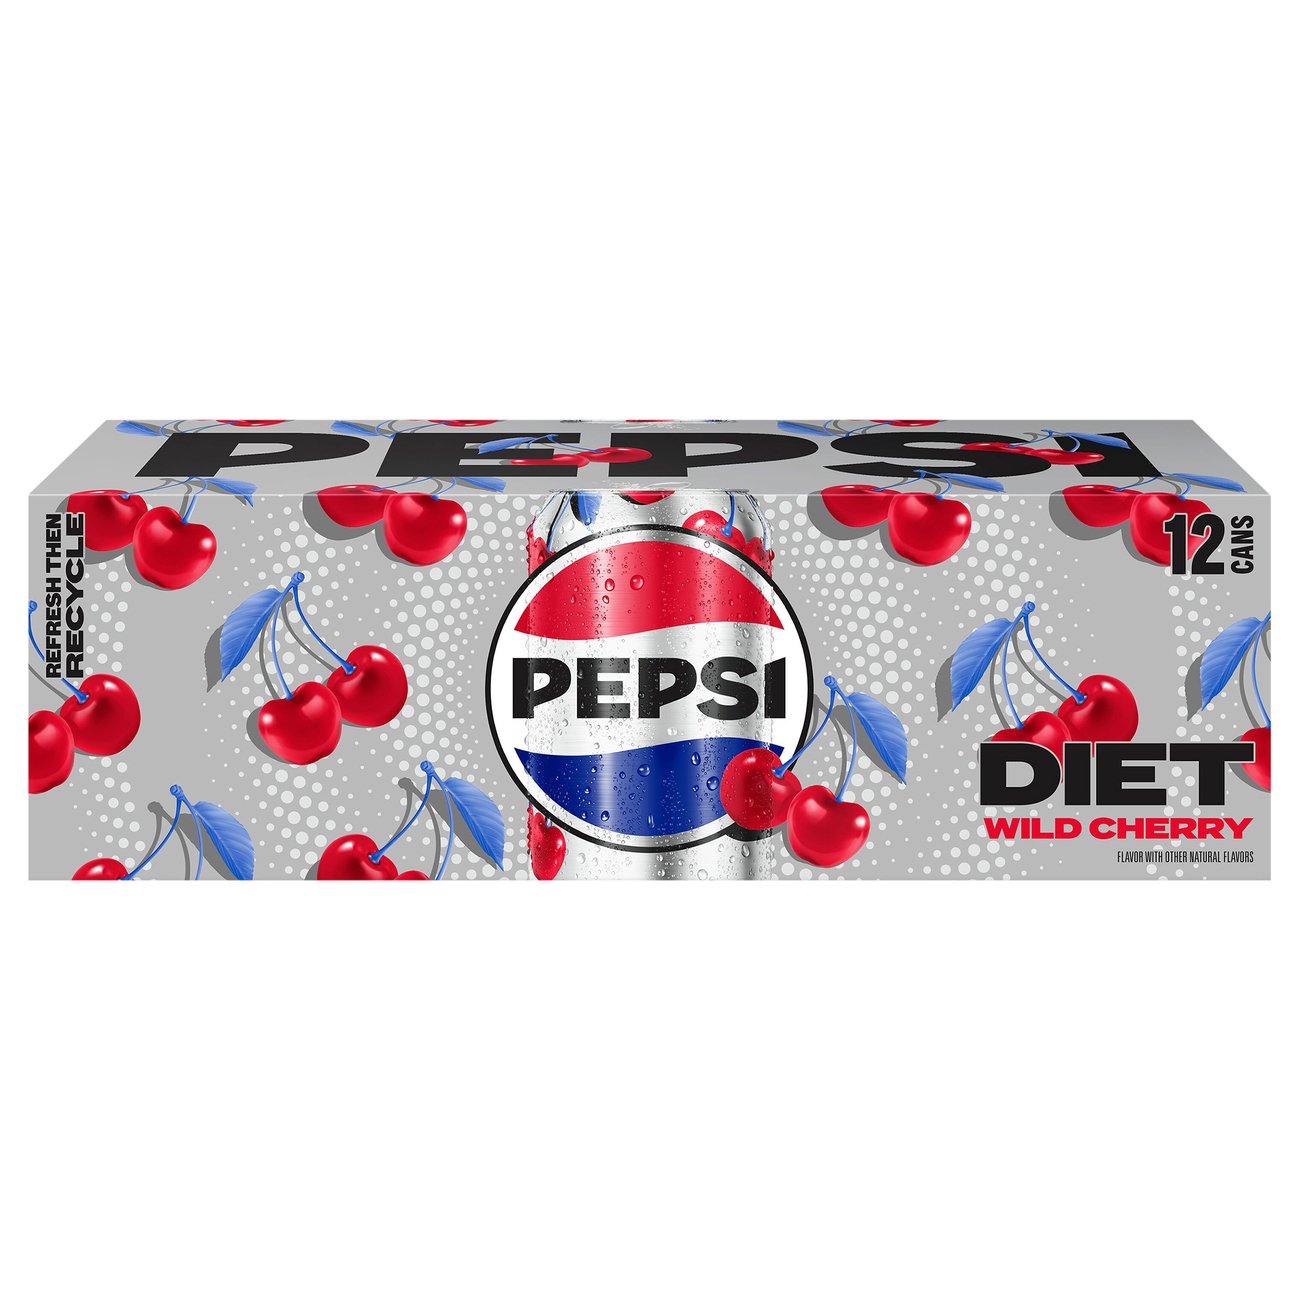 Pepsi Wild Cherry Diet Cola 12 pk Cans - Shop Soda at H-E-B